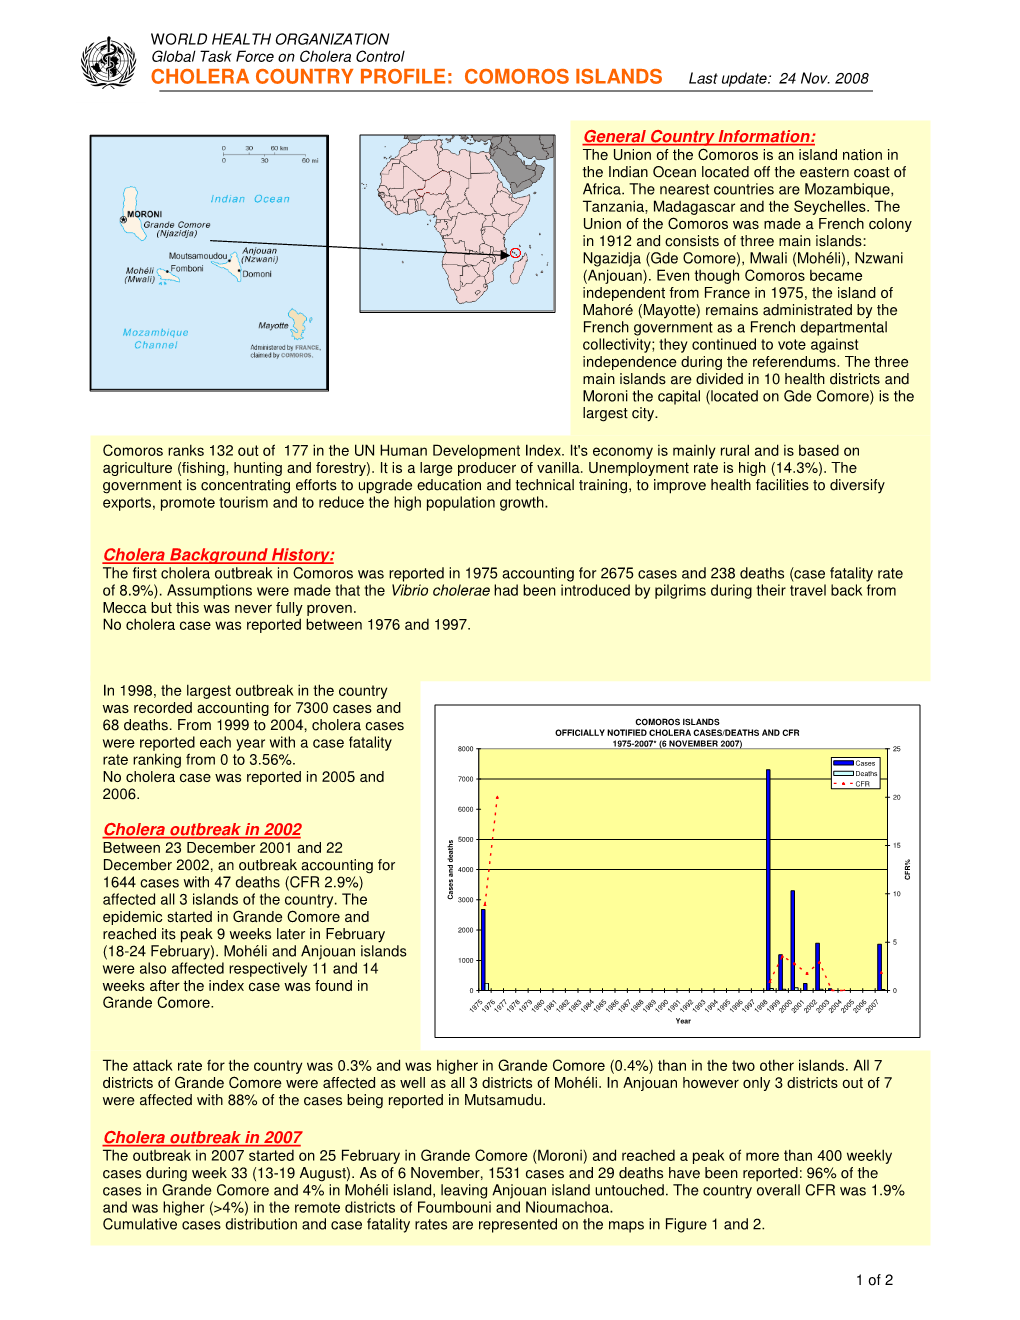 CHOLERA COUNTRY PROFILE: COMOROS ISLANDS Last Update: 24 Nov